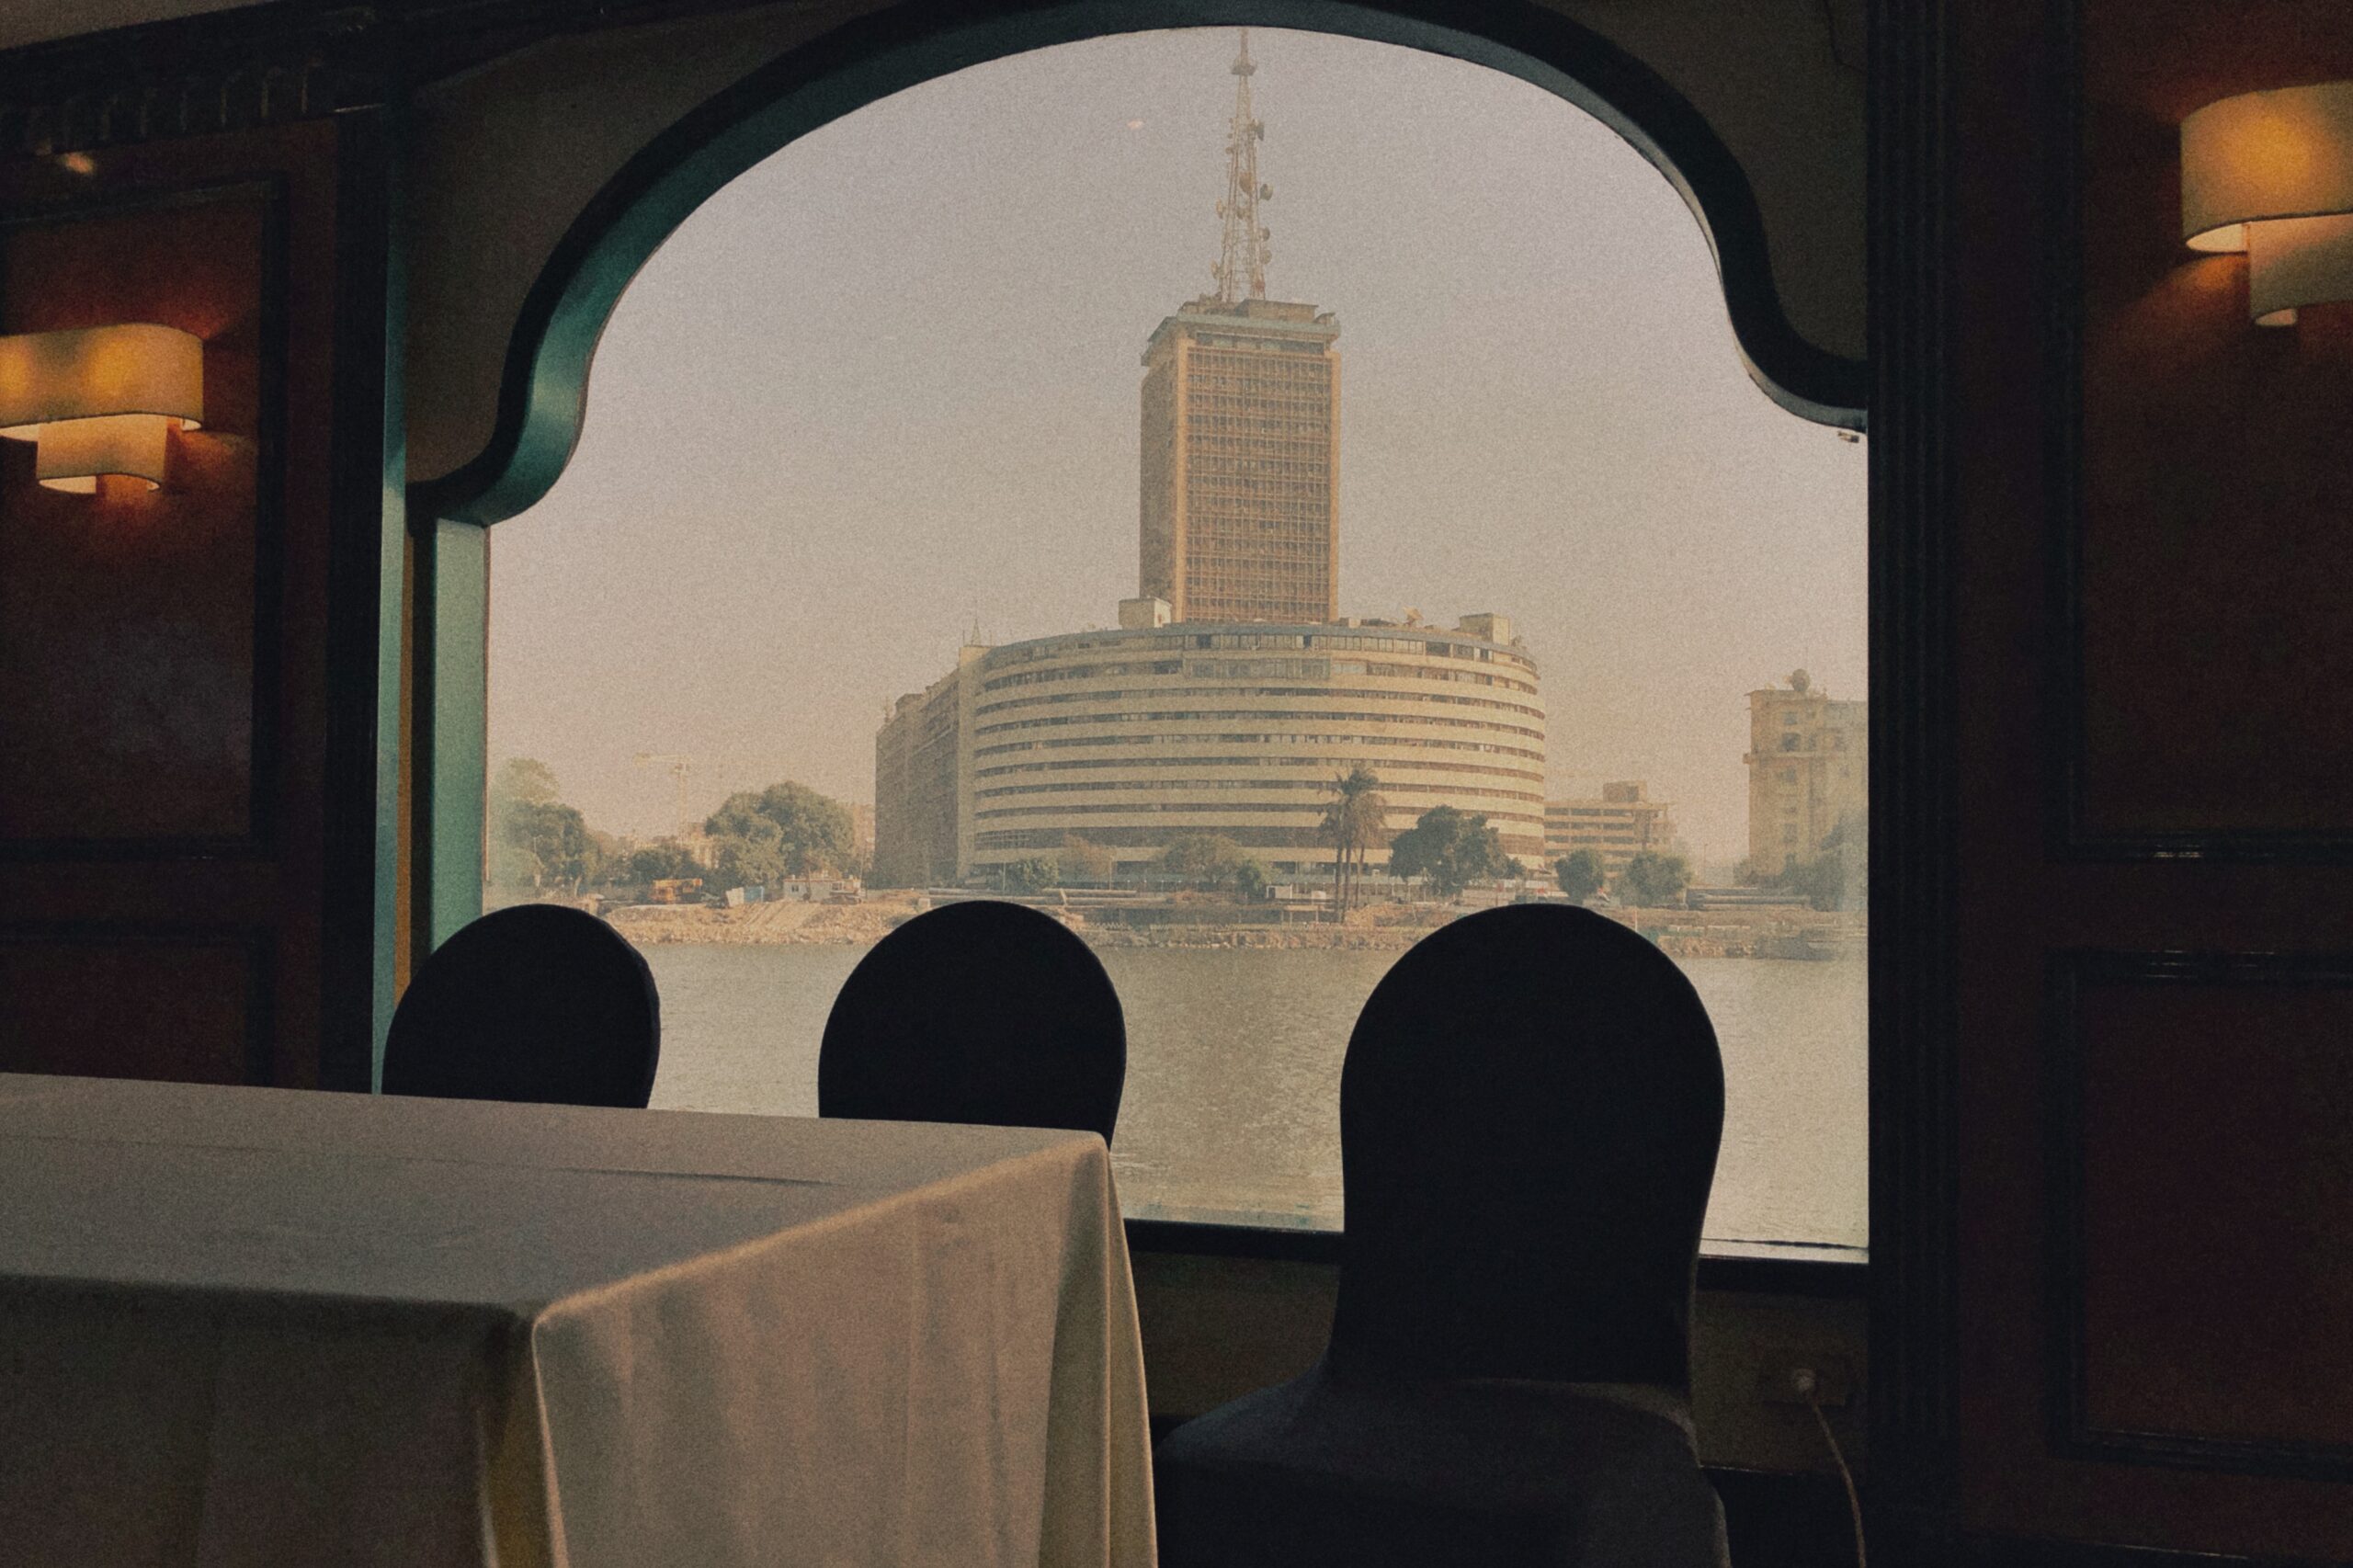 Cairo, Egypt 2021.